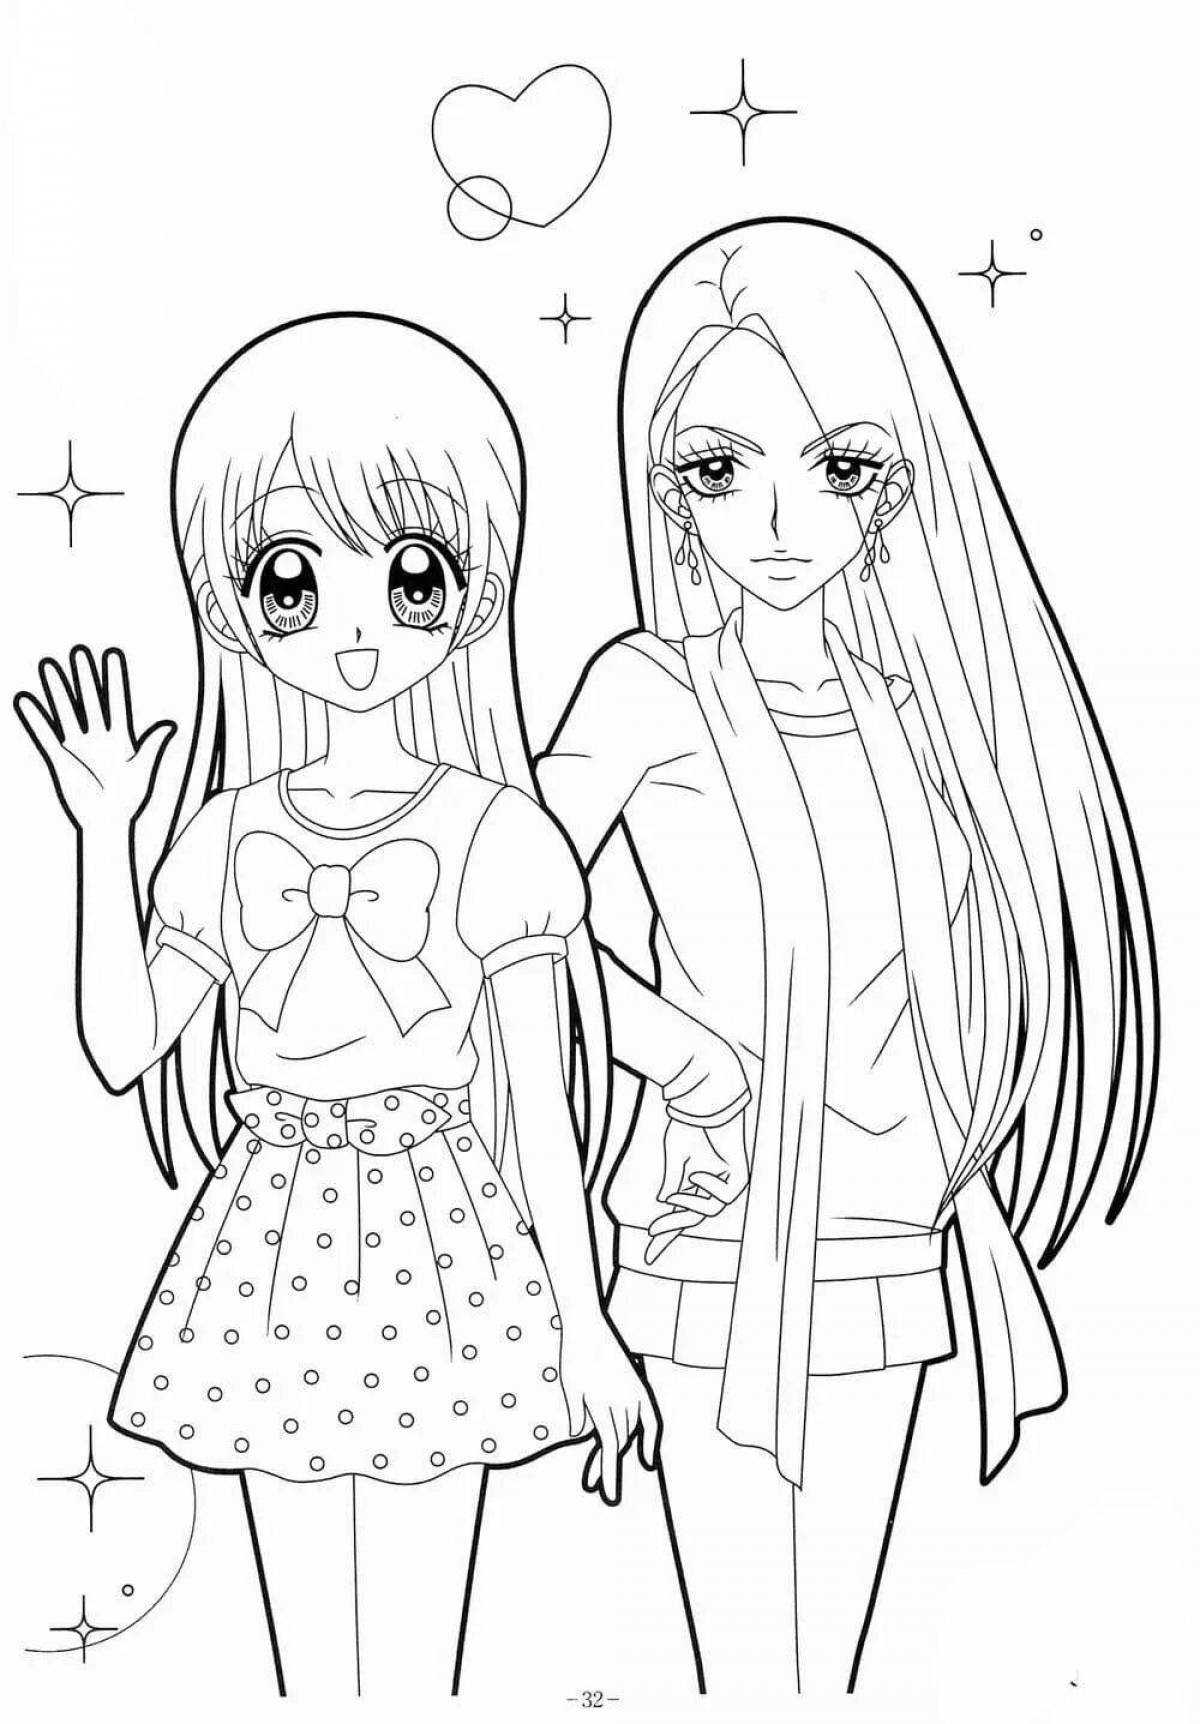 Beautiful 15 year old anime girls coloring book